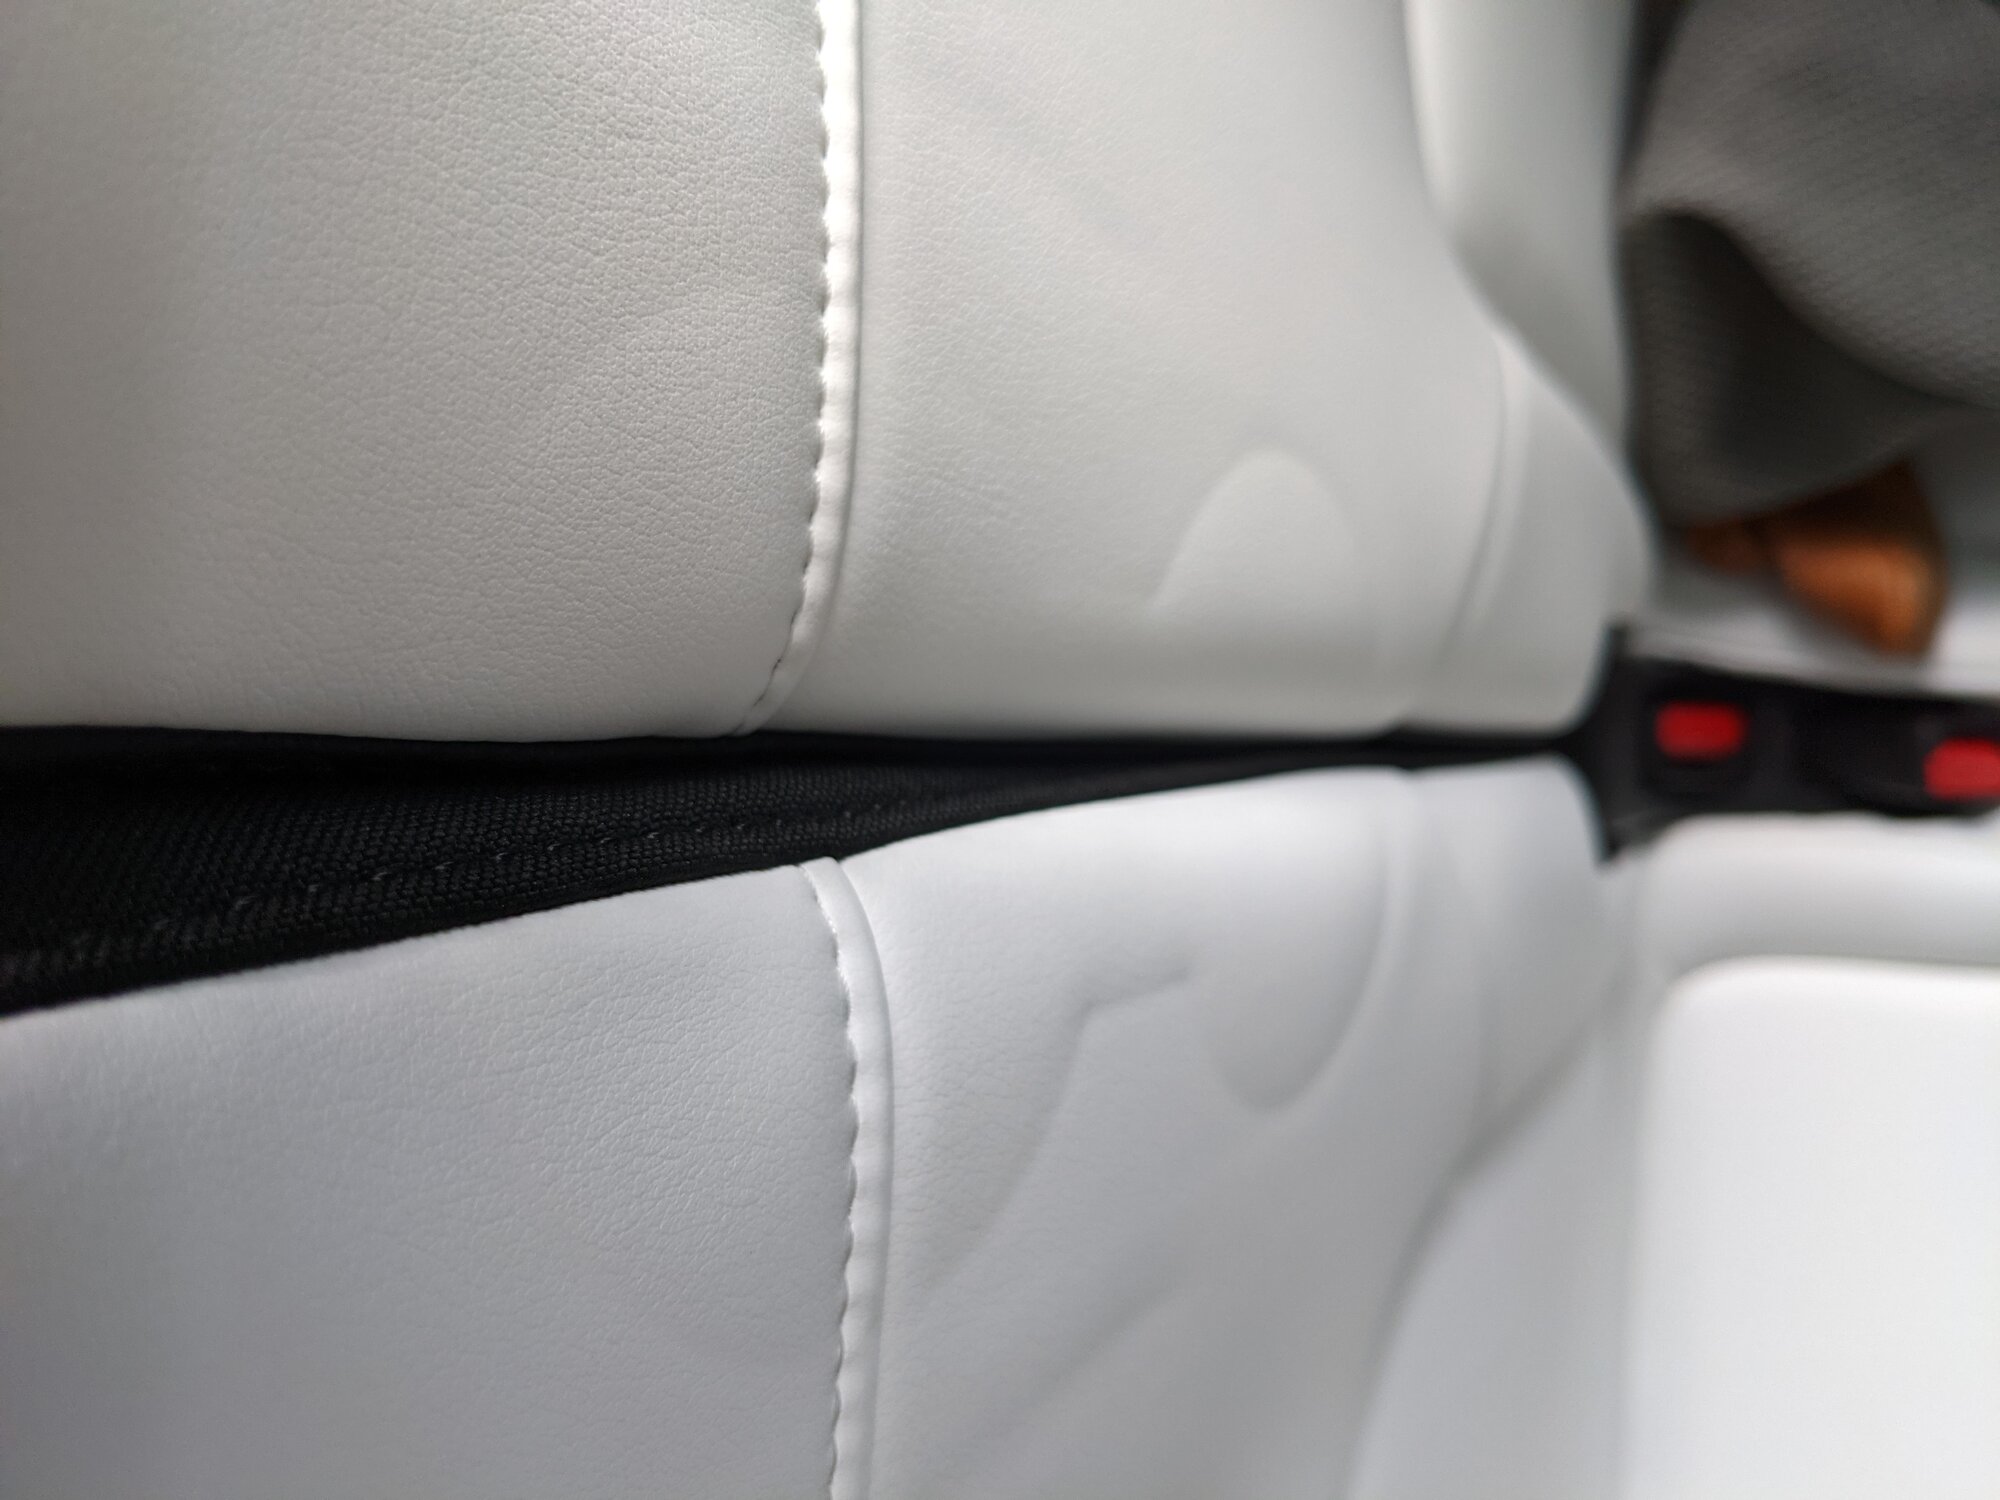 Cushion Car Seat Covers - Spot Dem